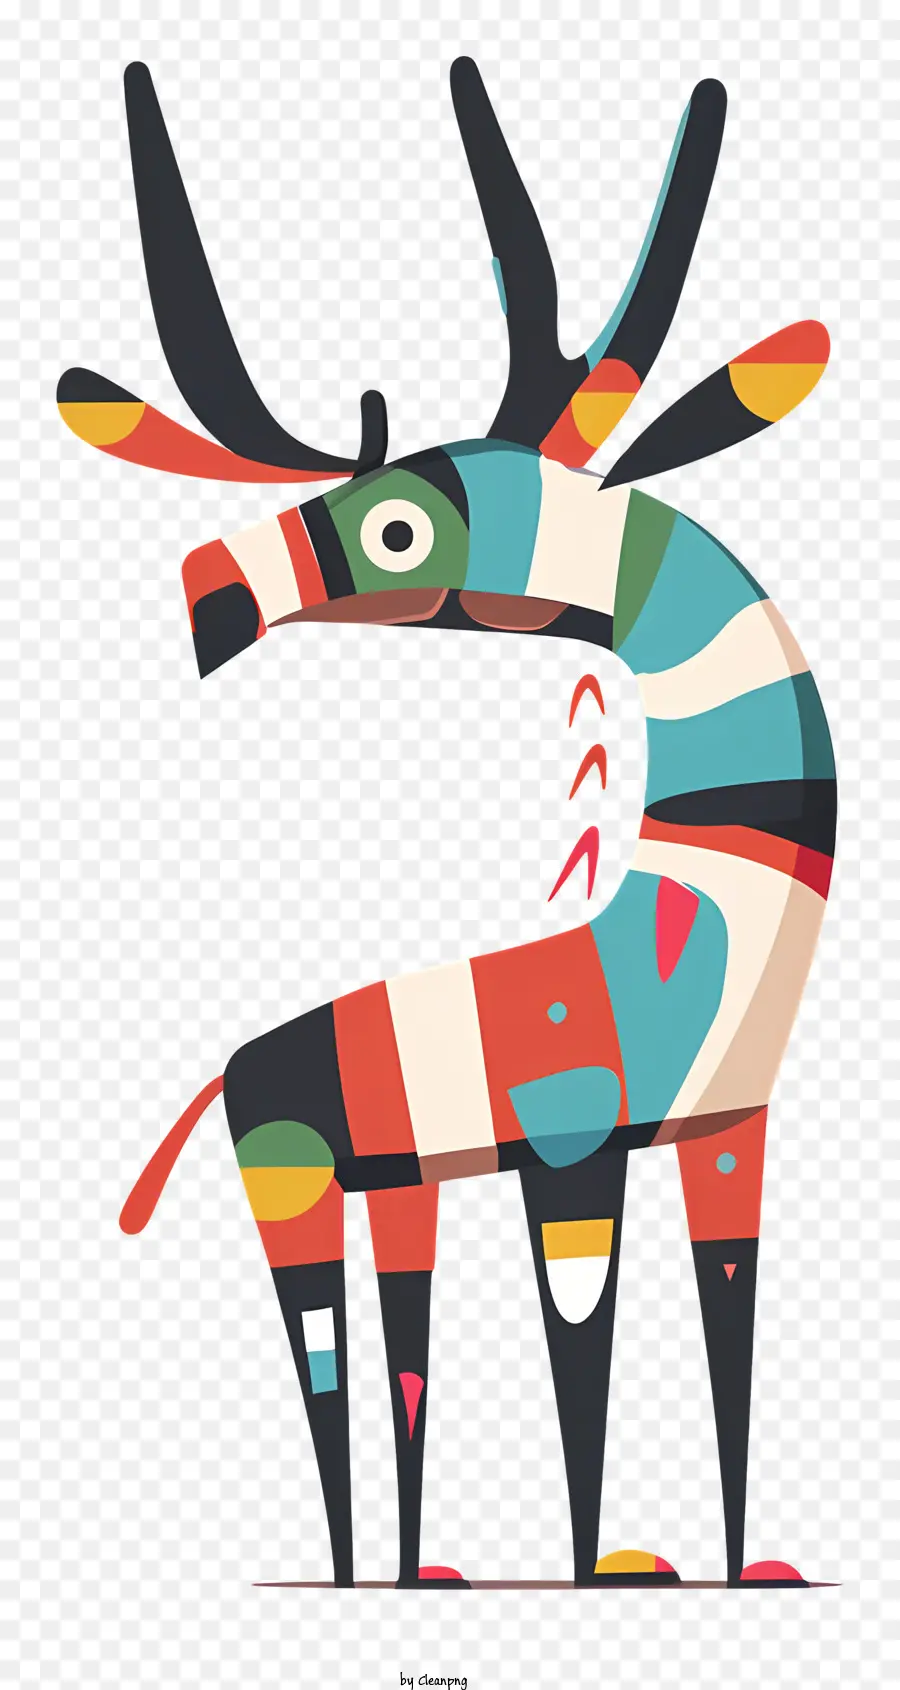 seltsame Rentiere farbenfrohe Hirsche Große Antler abstrakte Muster Buntes Tier - Buntes Hirsch mit abstrakten Mustern am Körper